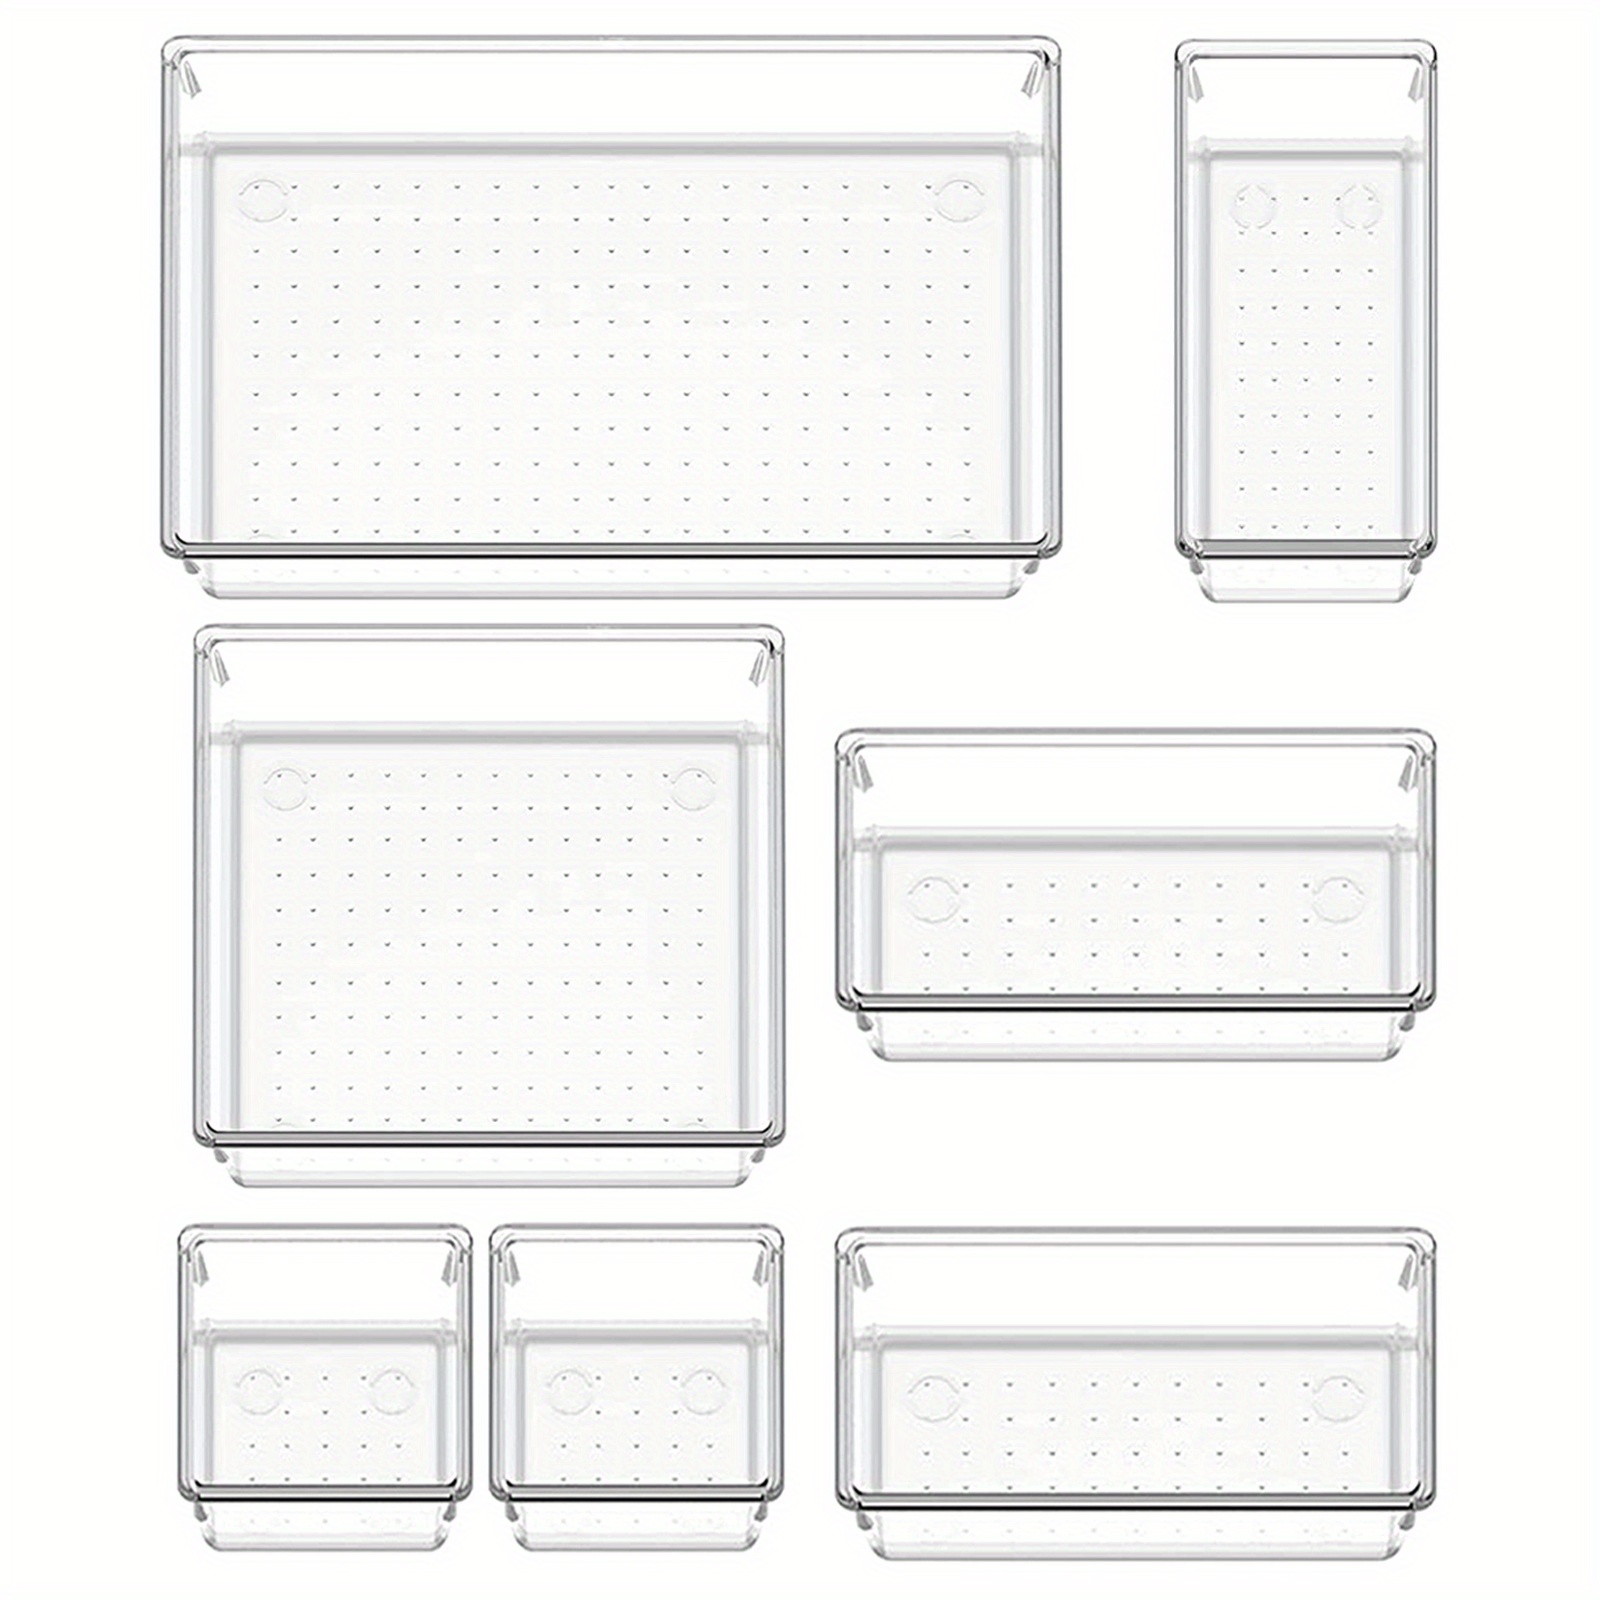 Seenda 7 Pack Desk Drawer Organizer Trays with 4 Different Sizes,Versatile Clear Drawer Organizers Storage for Bathroom, Makeup, Bedroom, Kitchen,Office